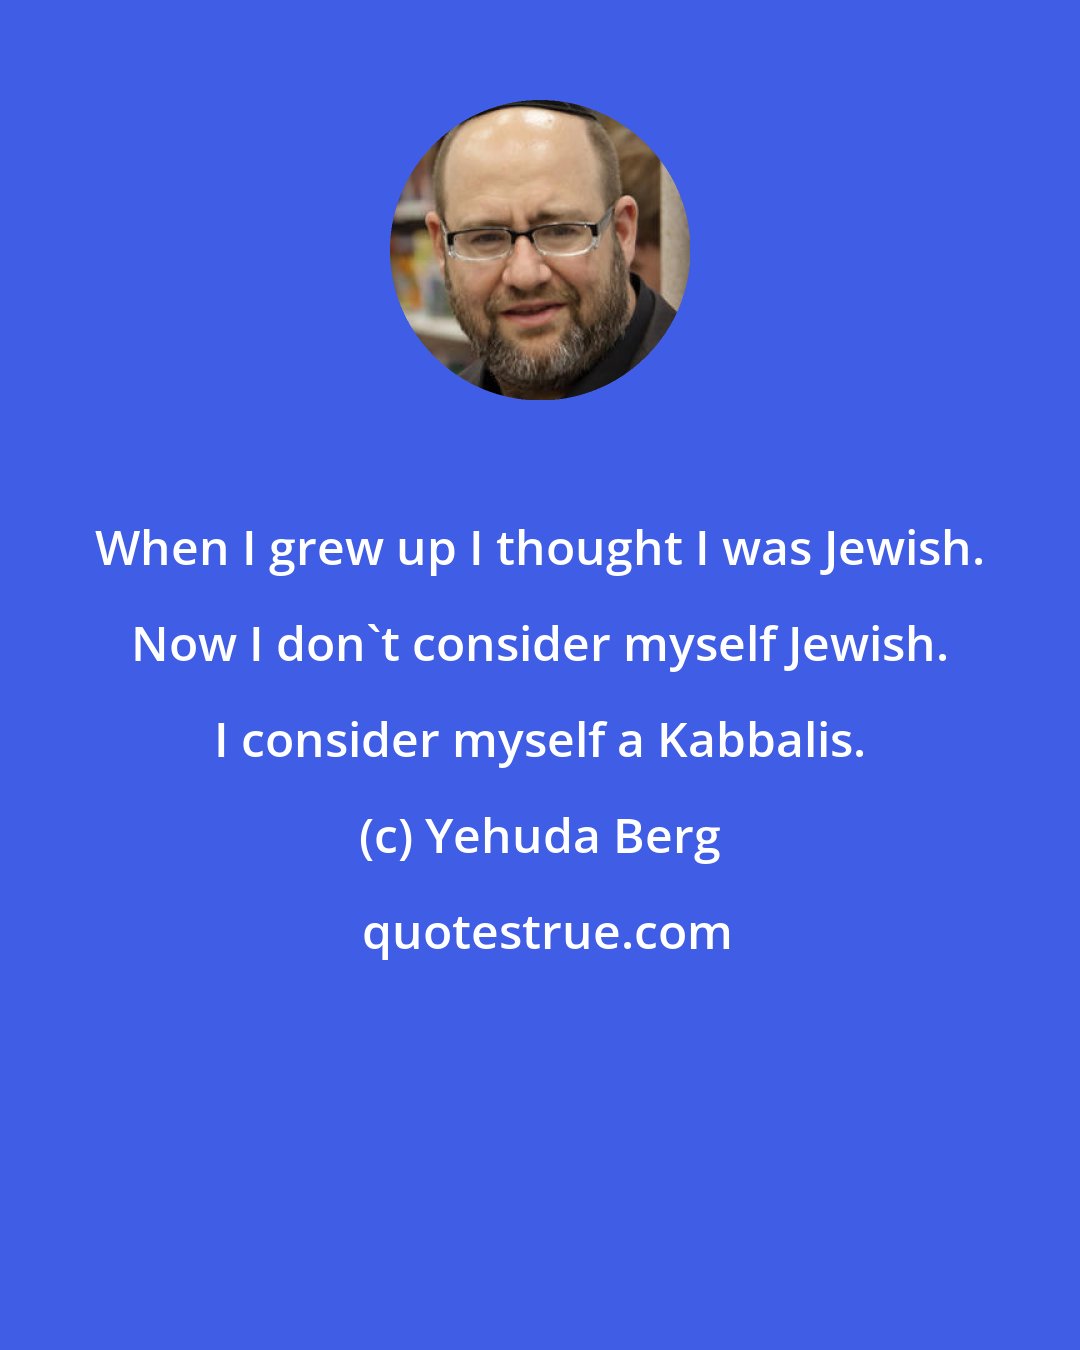 Yehuda Berg: When I grew up I thought I was Jewish. Now I don't consider myself Jewish. I consider myself a Kabbalis.